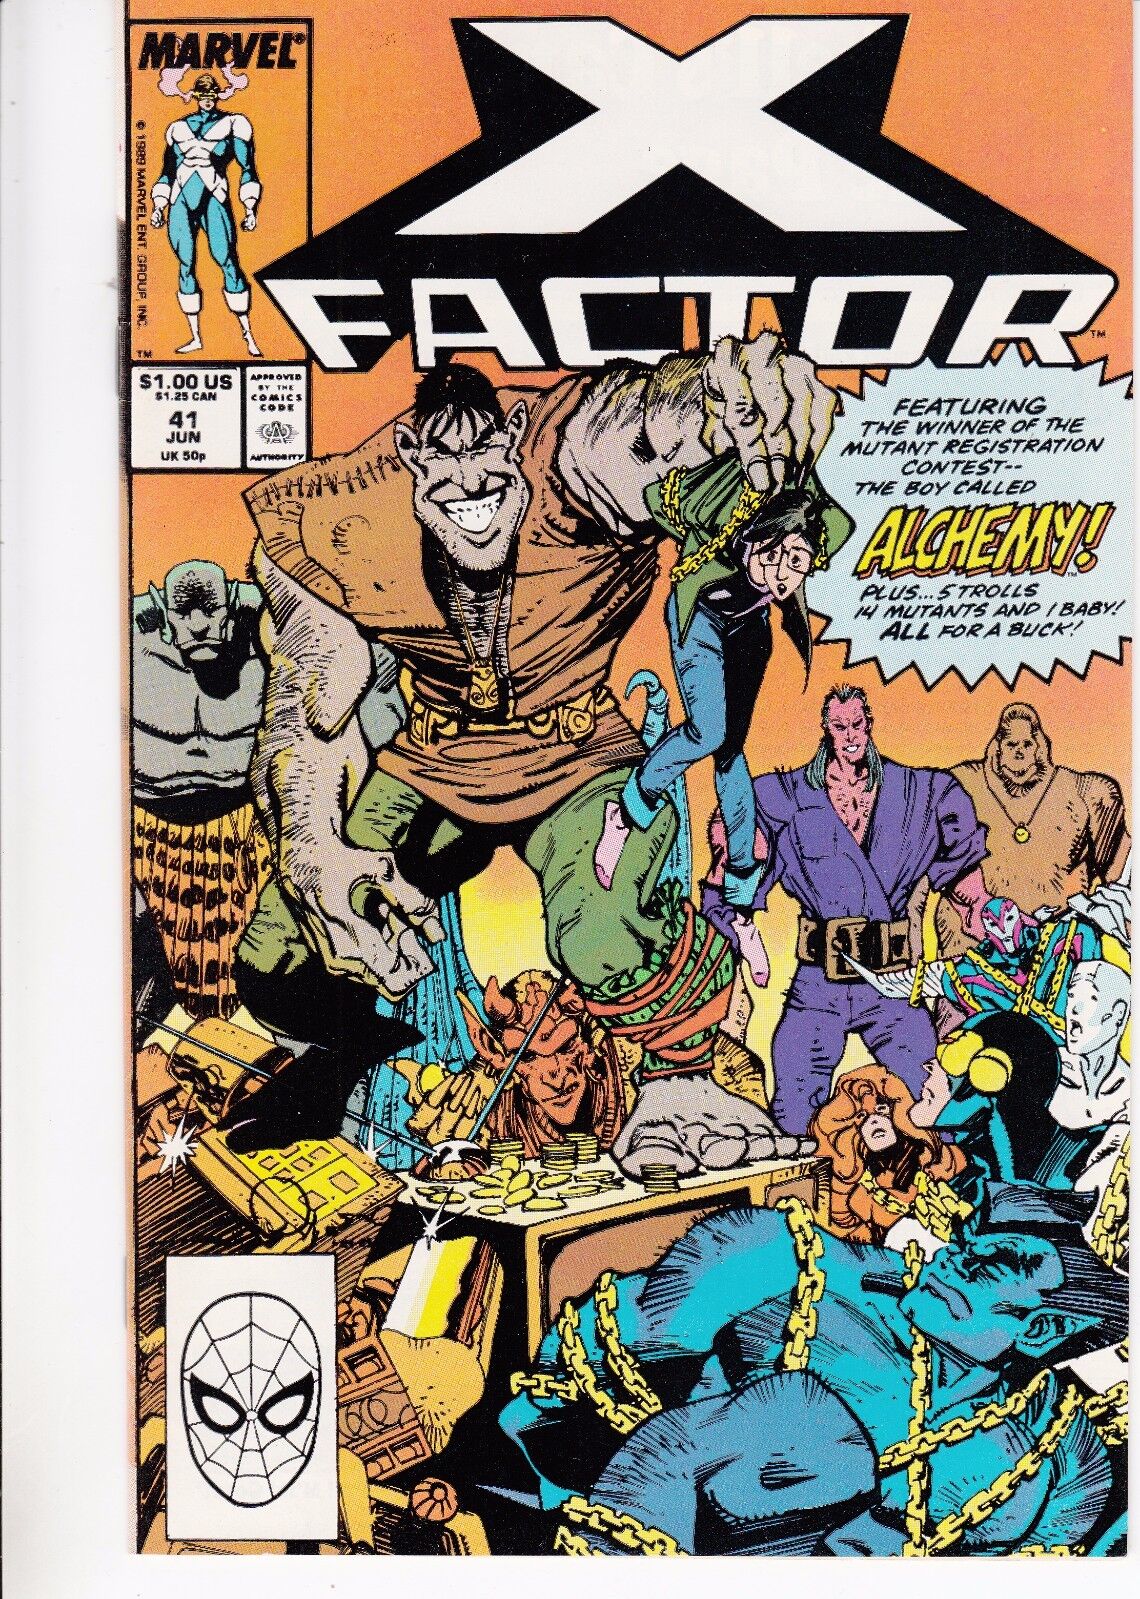 X-FACTOR  #41 1989 STAN LEE -BOY CALLED ALCHEMY- SIMONSON/ ROSEN...NM-